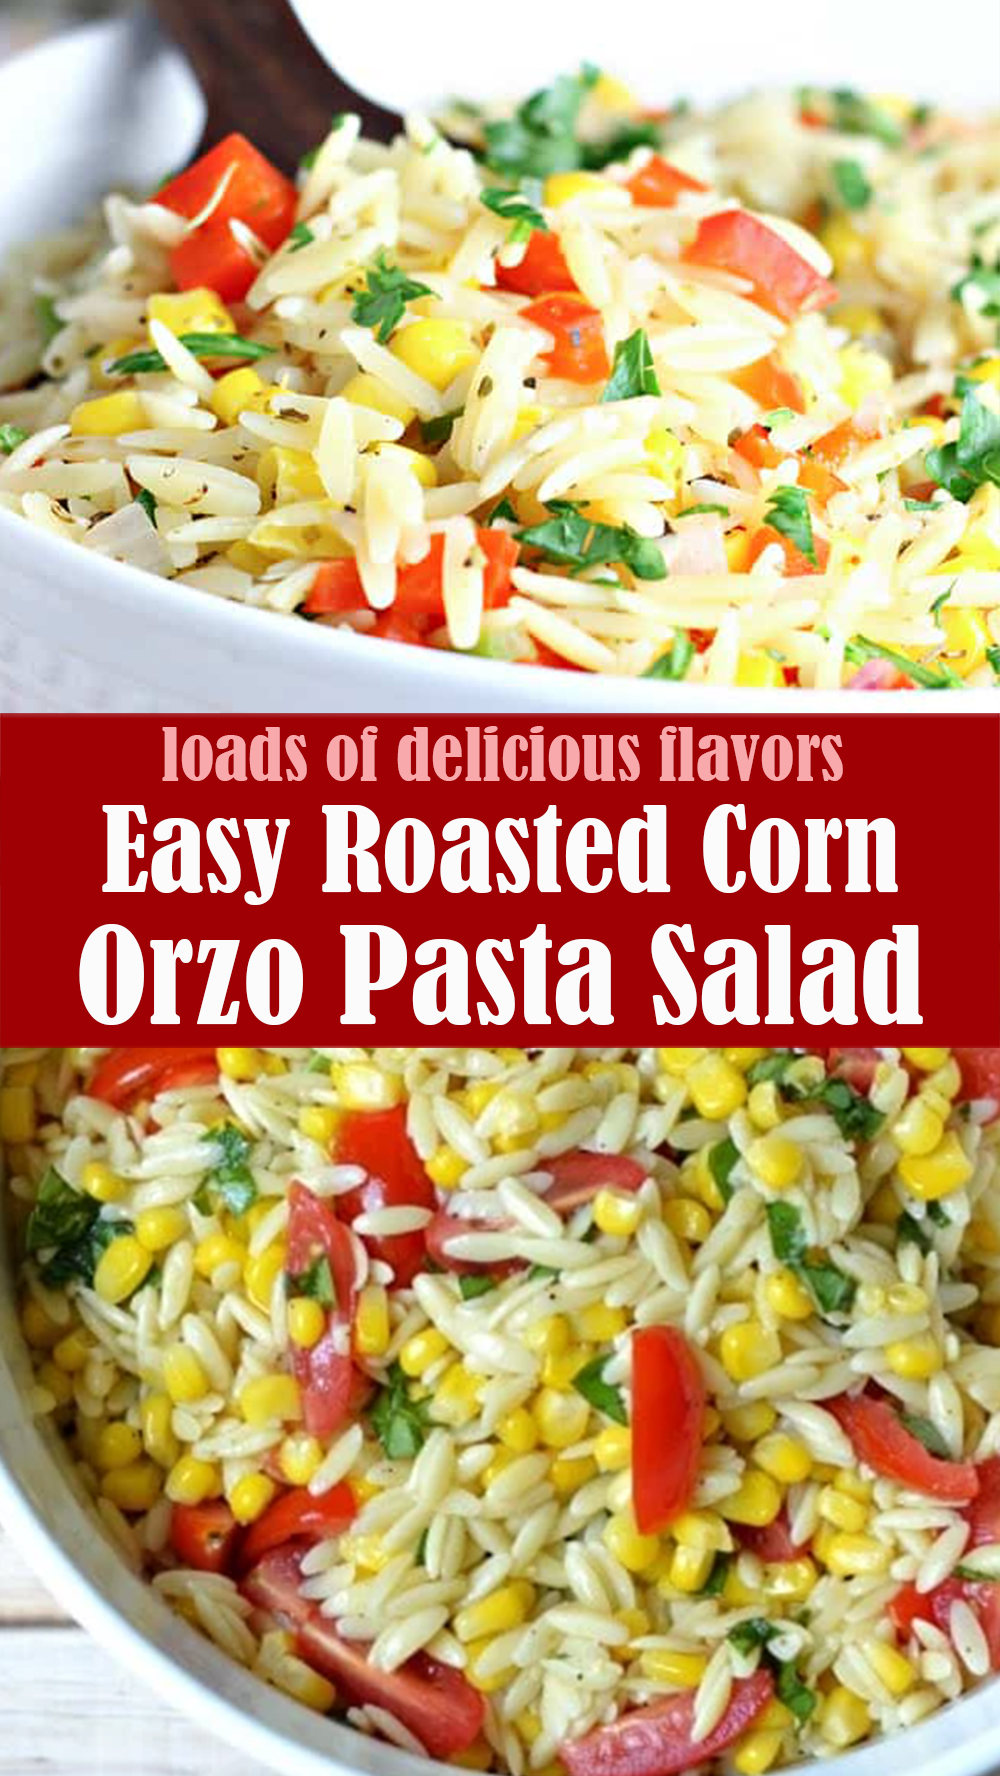 Easy Roasted Corn Orzo Pasta Salad